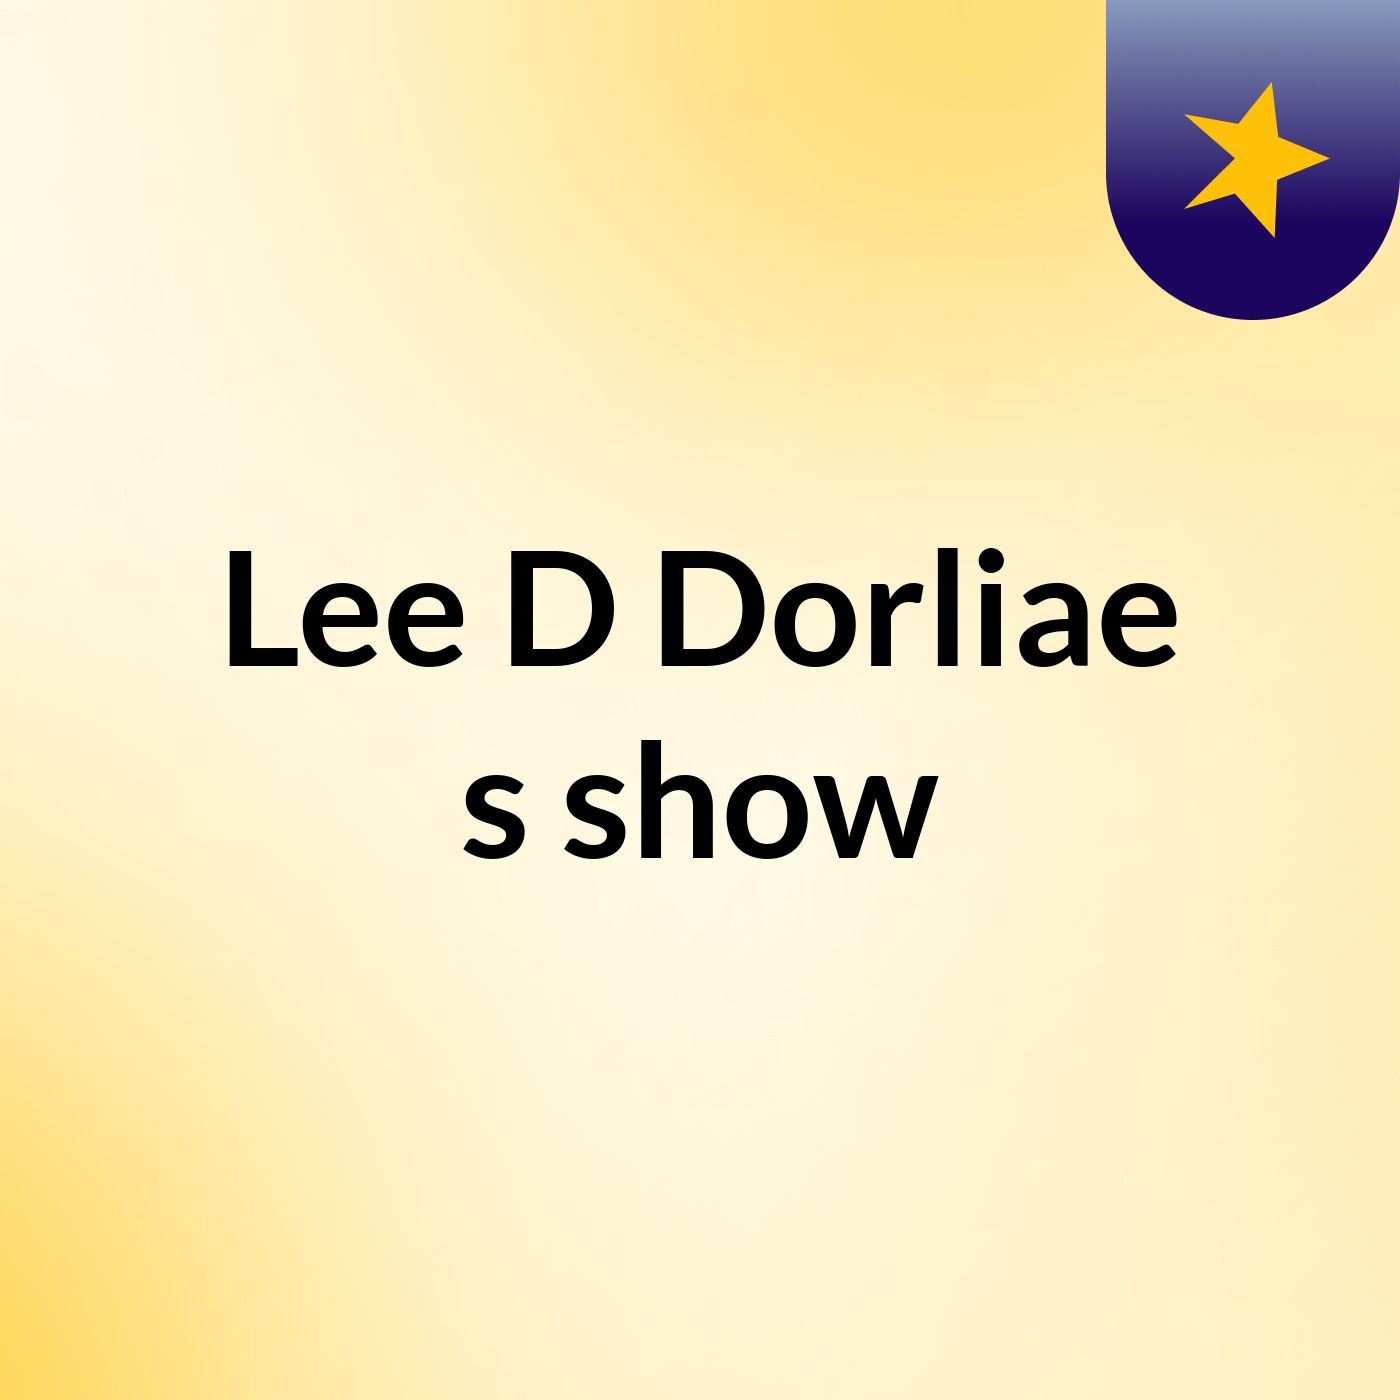 Lee D Dorliae's show